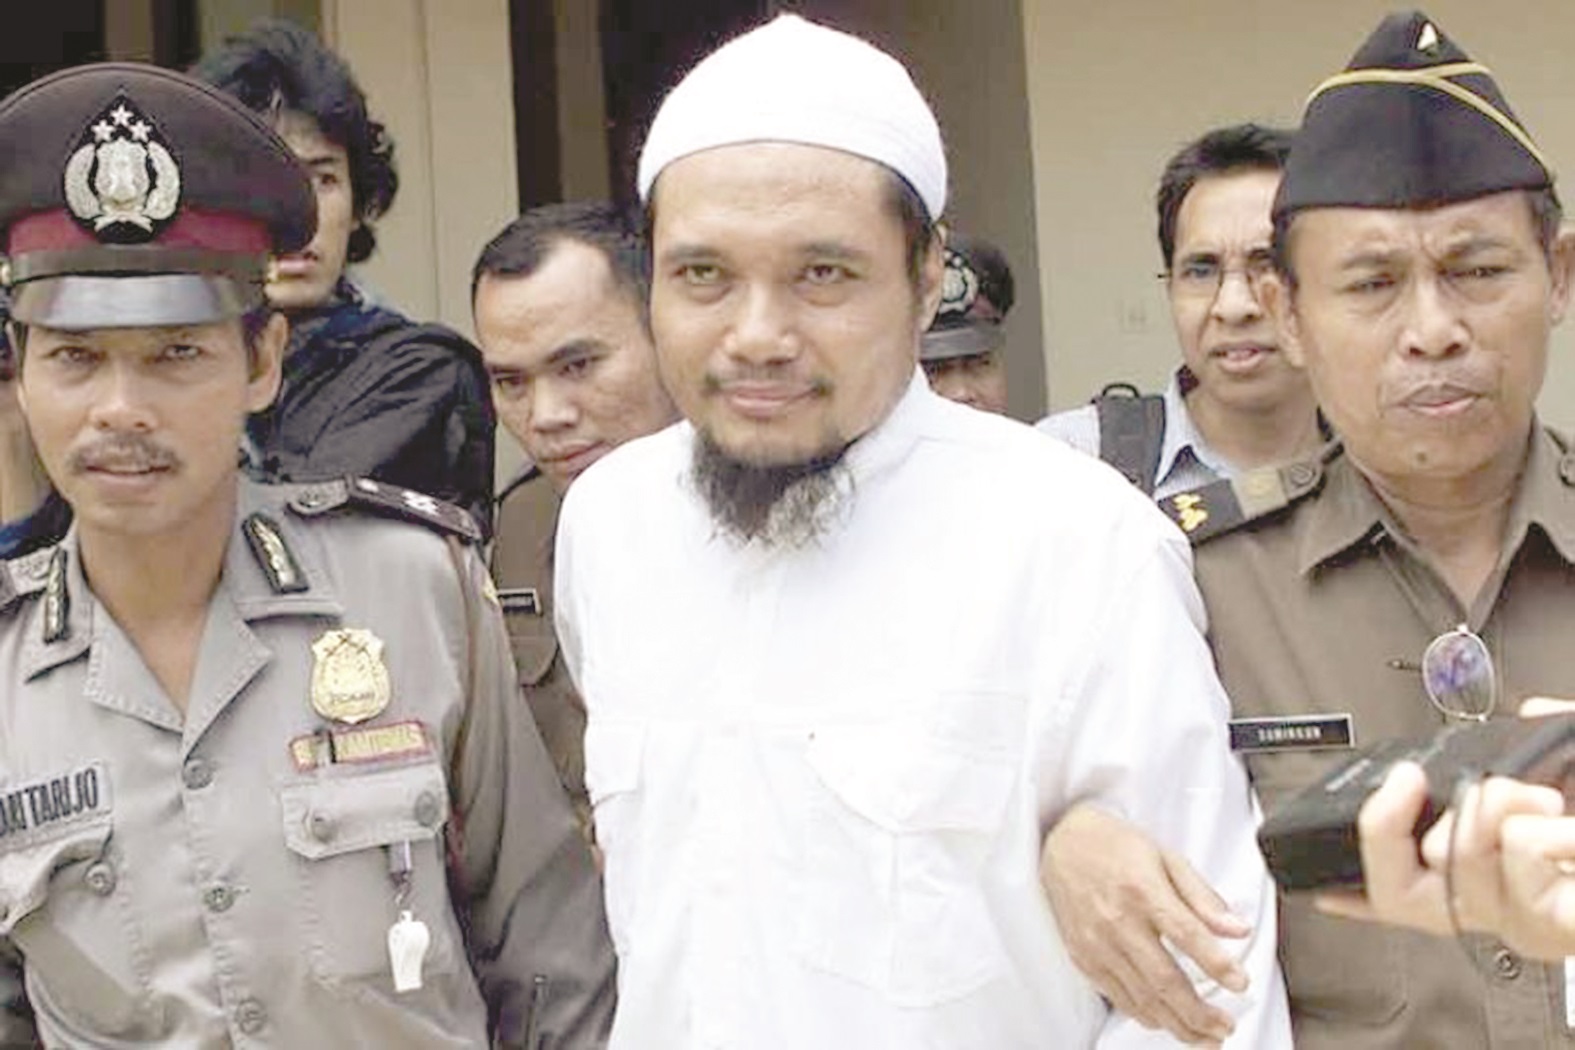 Indonesia arrests key leader in al-Qaeda linked group